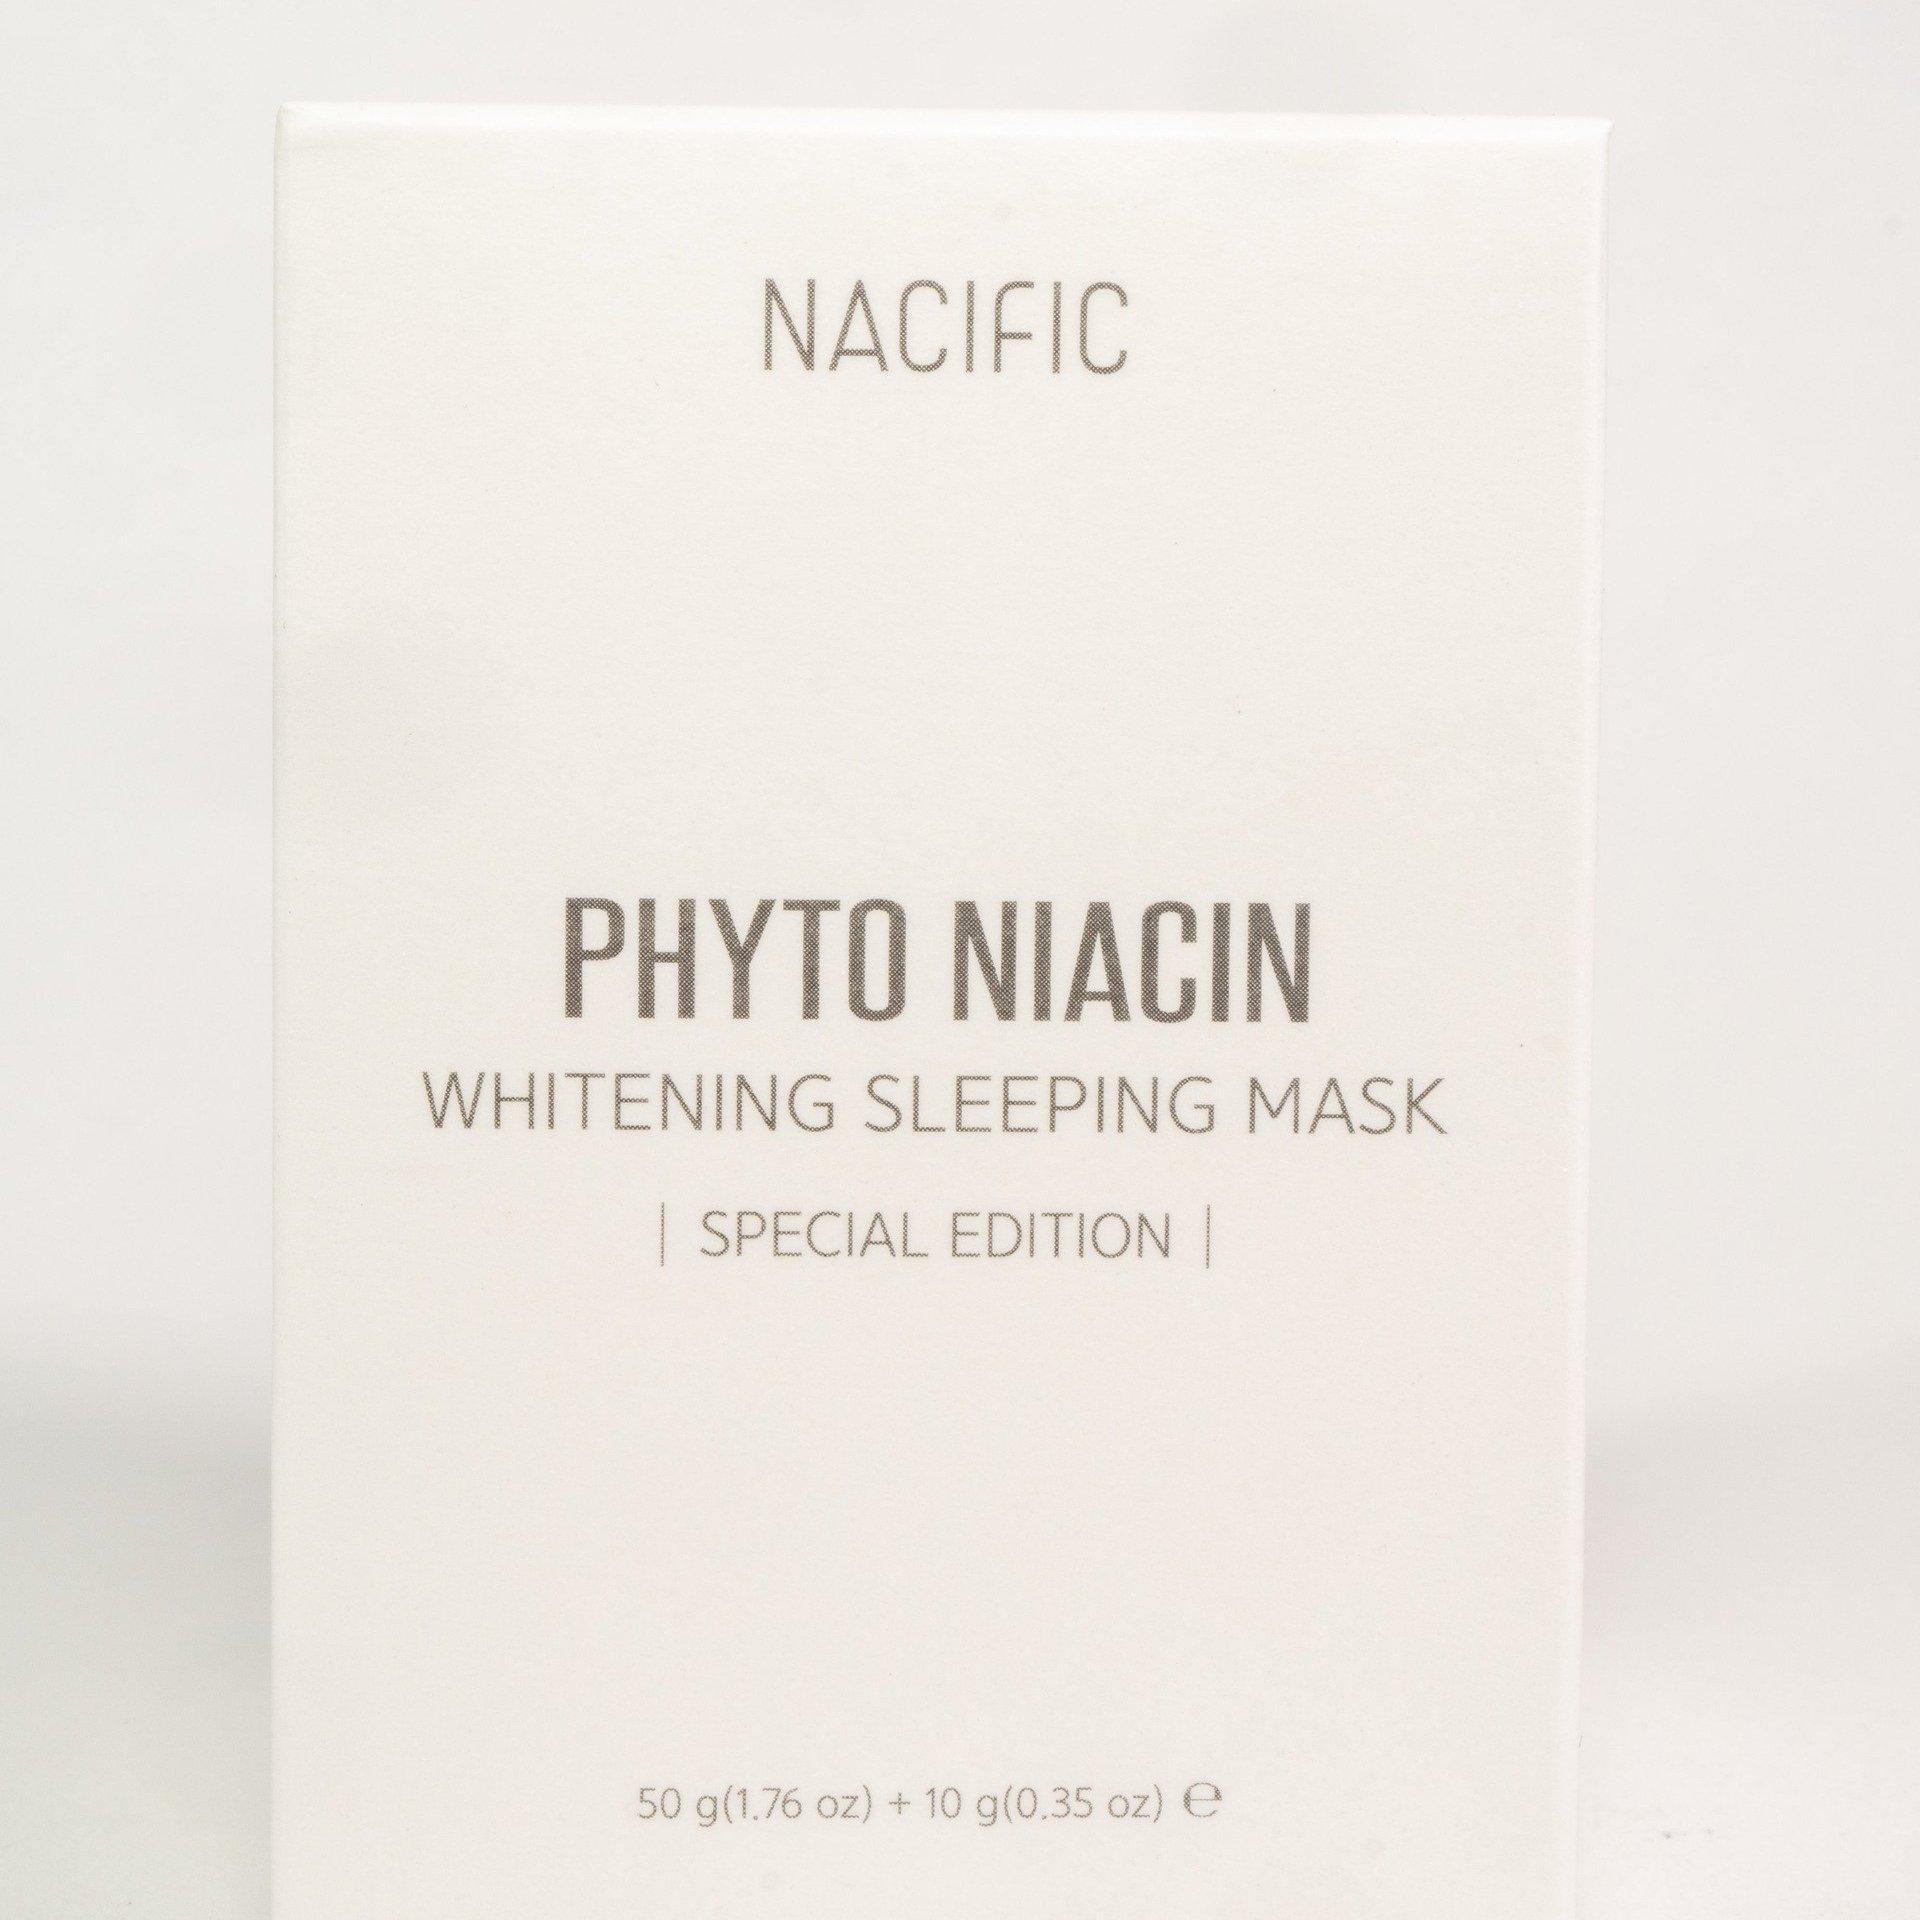 NACIFIC Phyto Niacin Whitening Sleeping Mask 50g